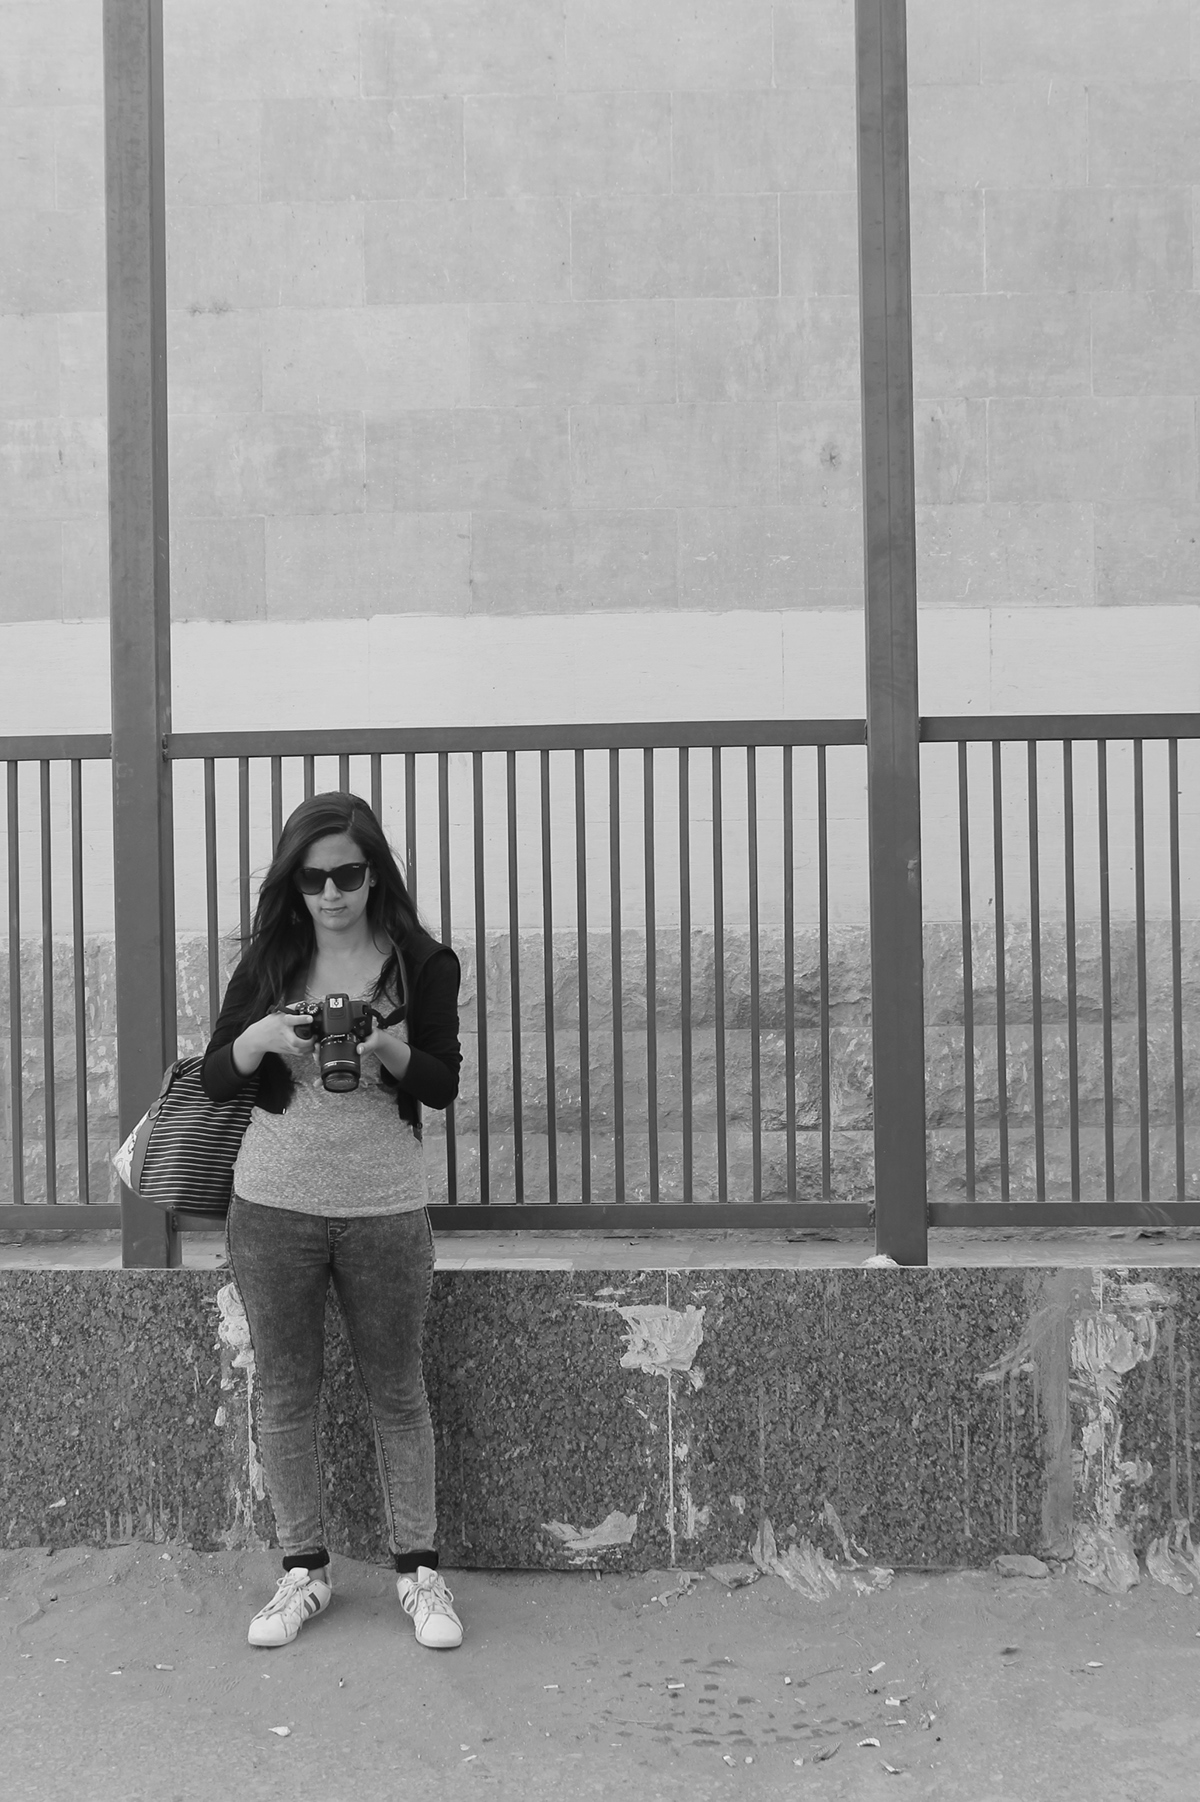 Street strangers no stranger tourists natives israel egypt jordan Travel black and white monochrome Canon portfolio